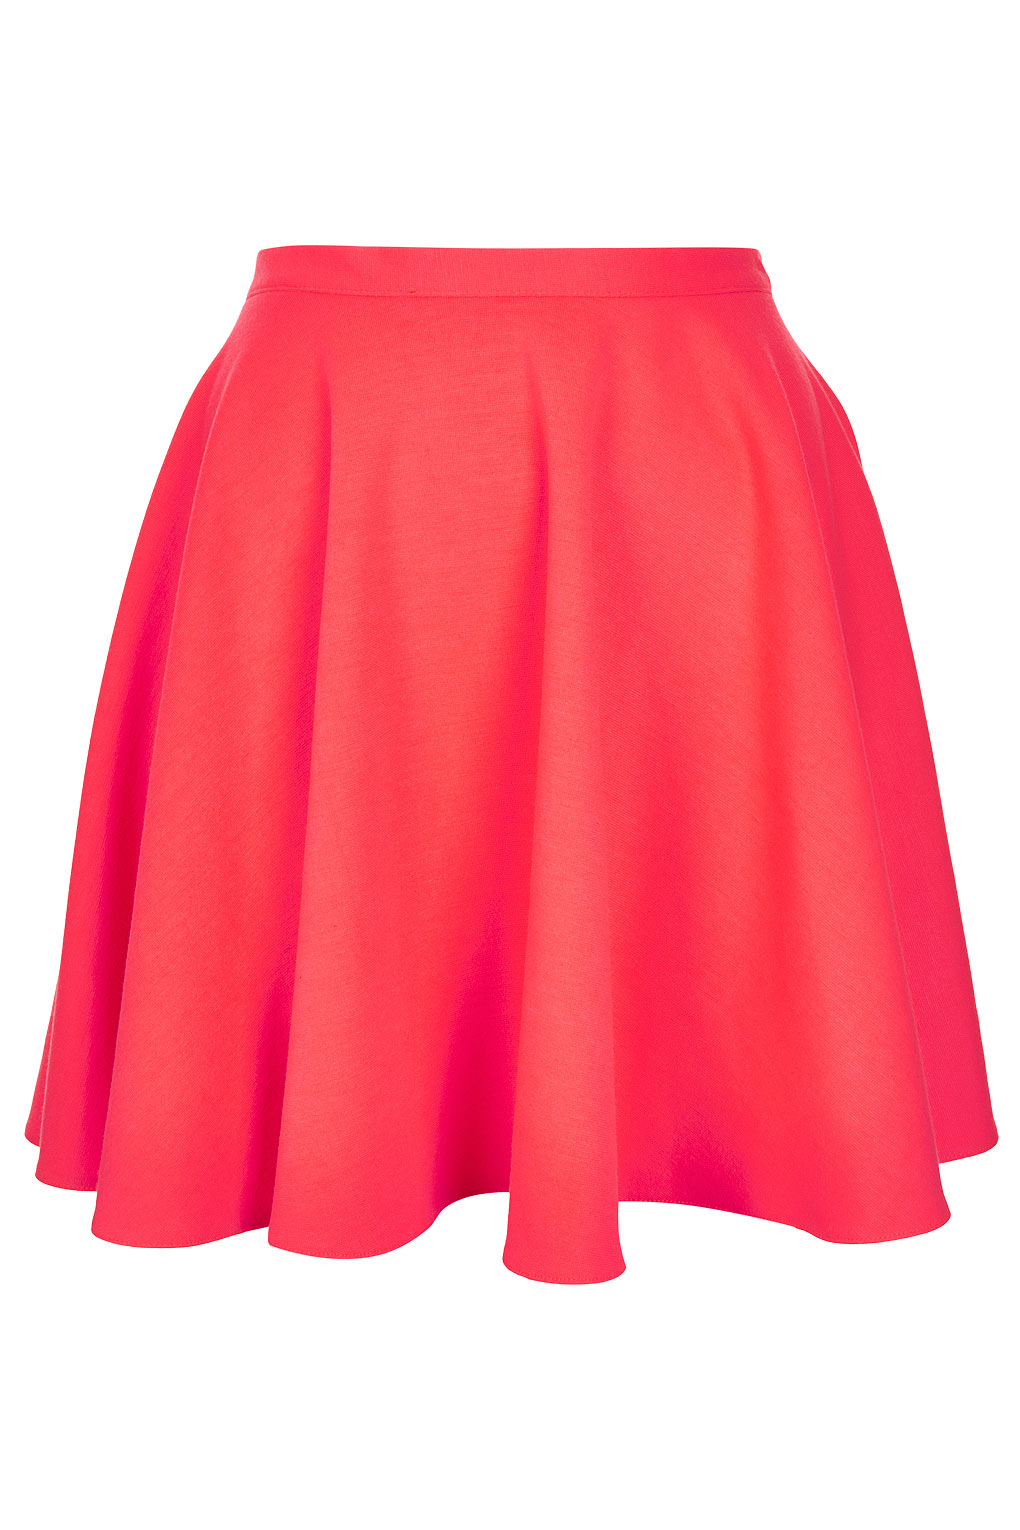 TOPSHOP Fluro Pink Skater Skirt - Lyst